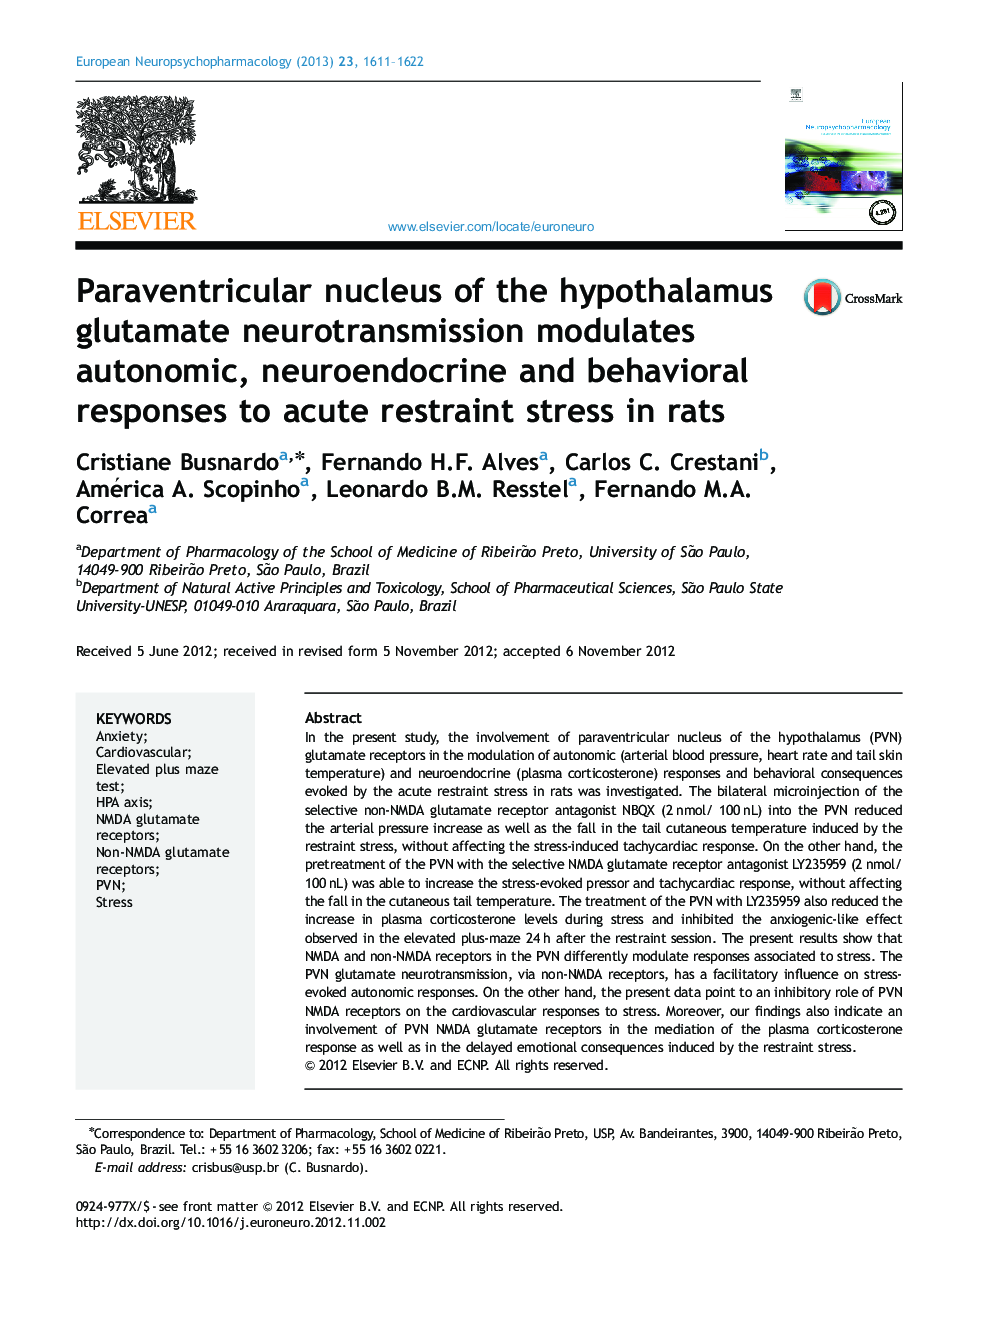 Paraventricular nucleus of the hypothalamus glutamate neurotransmission modulates autonomic, neuroendocrine and behavioral responses to acute restraint stress in rats